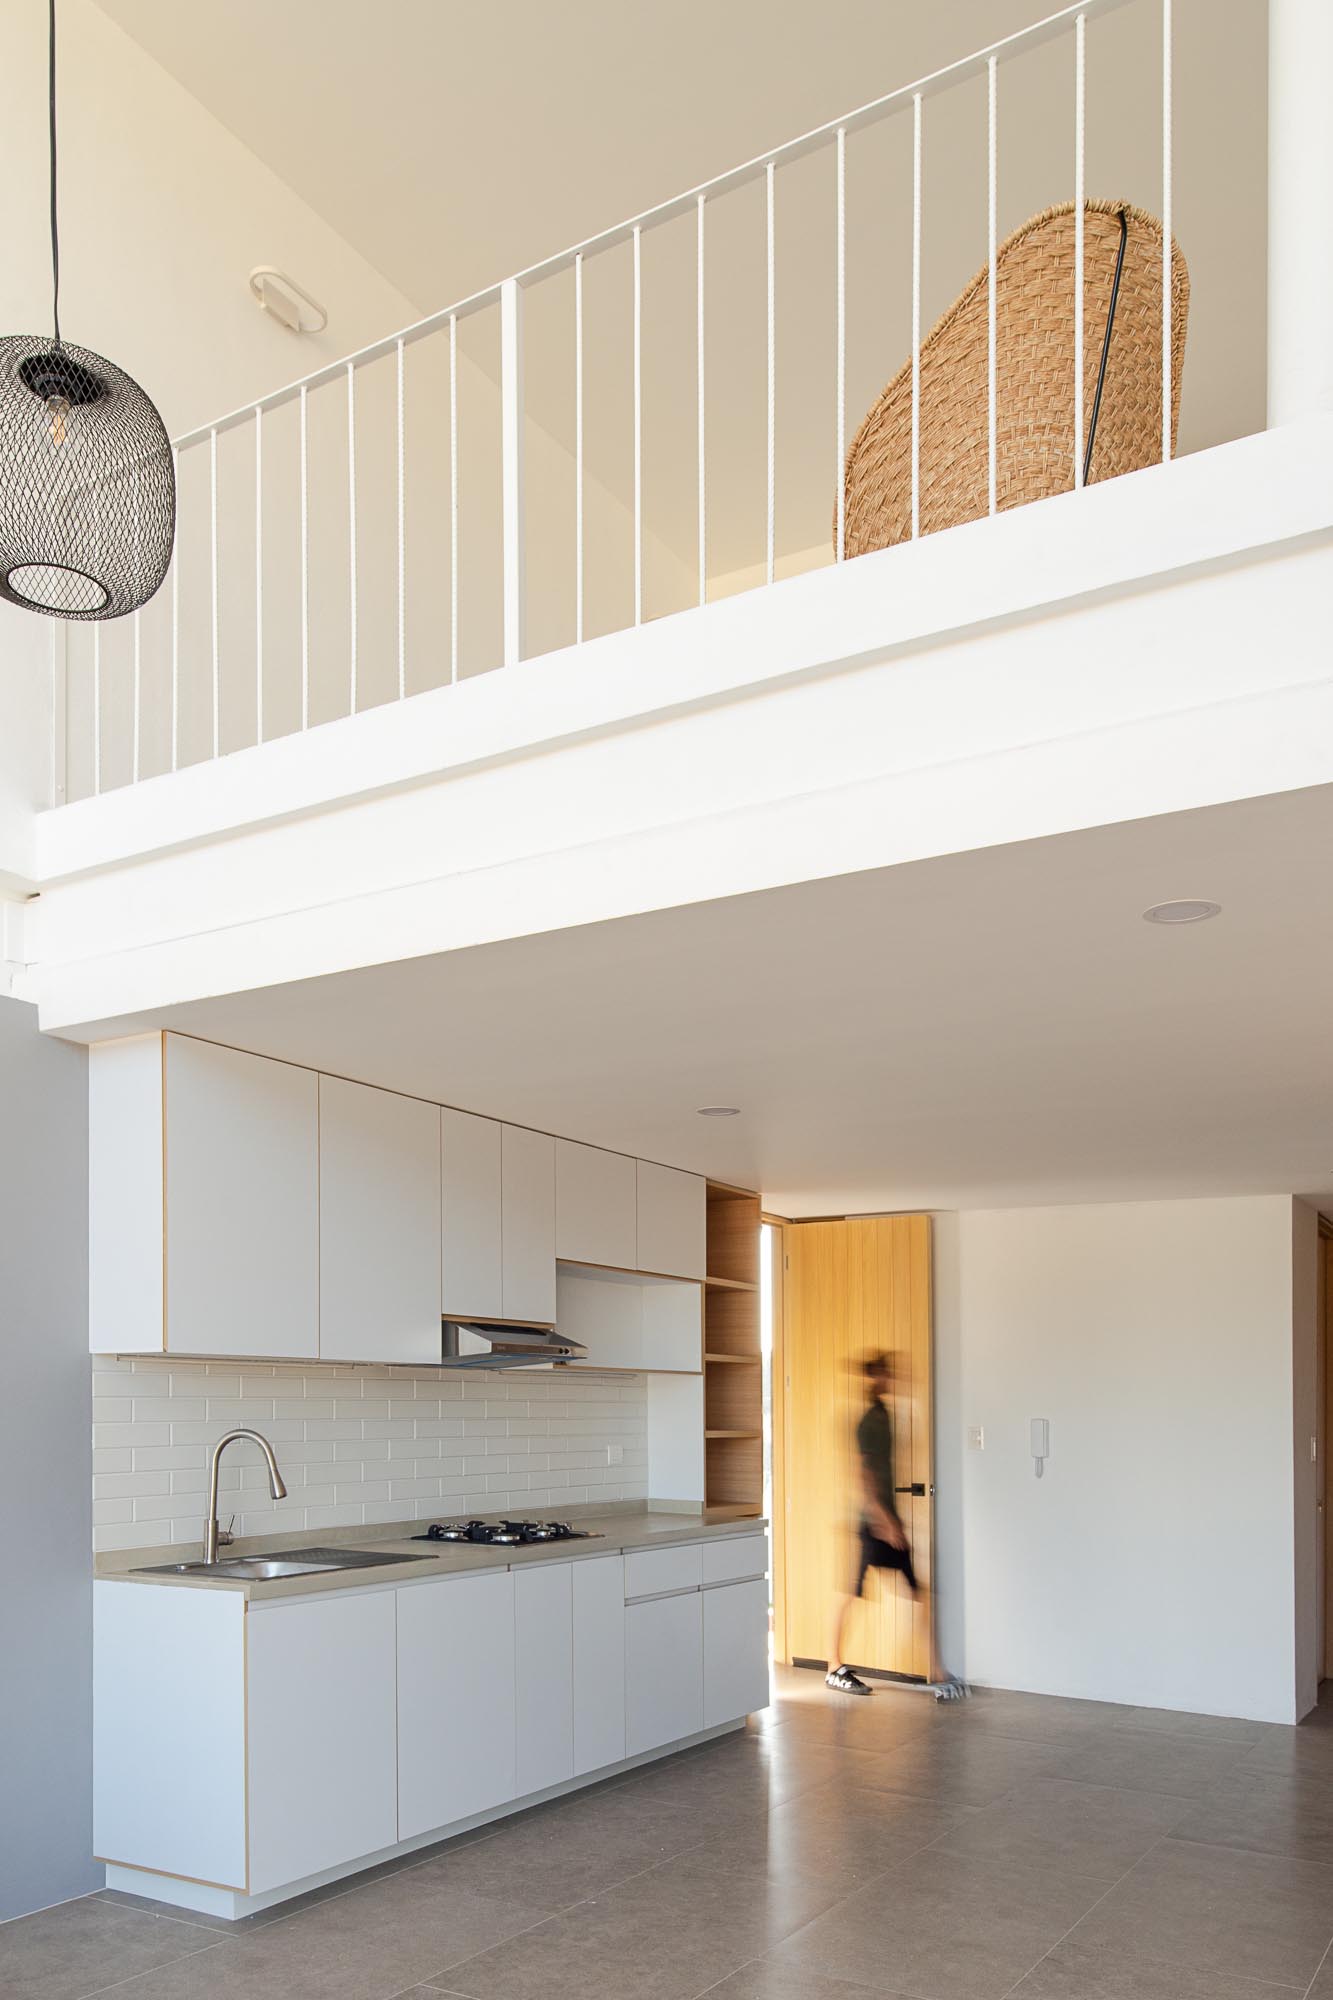 A modern loft apartment with minimalist kitchen.